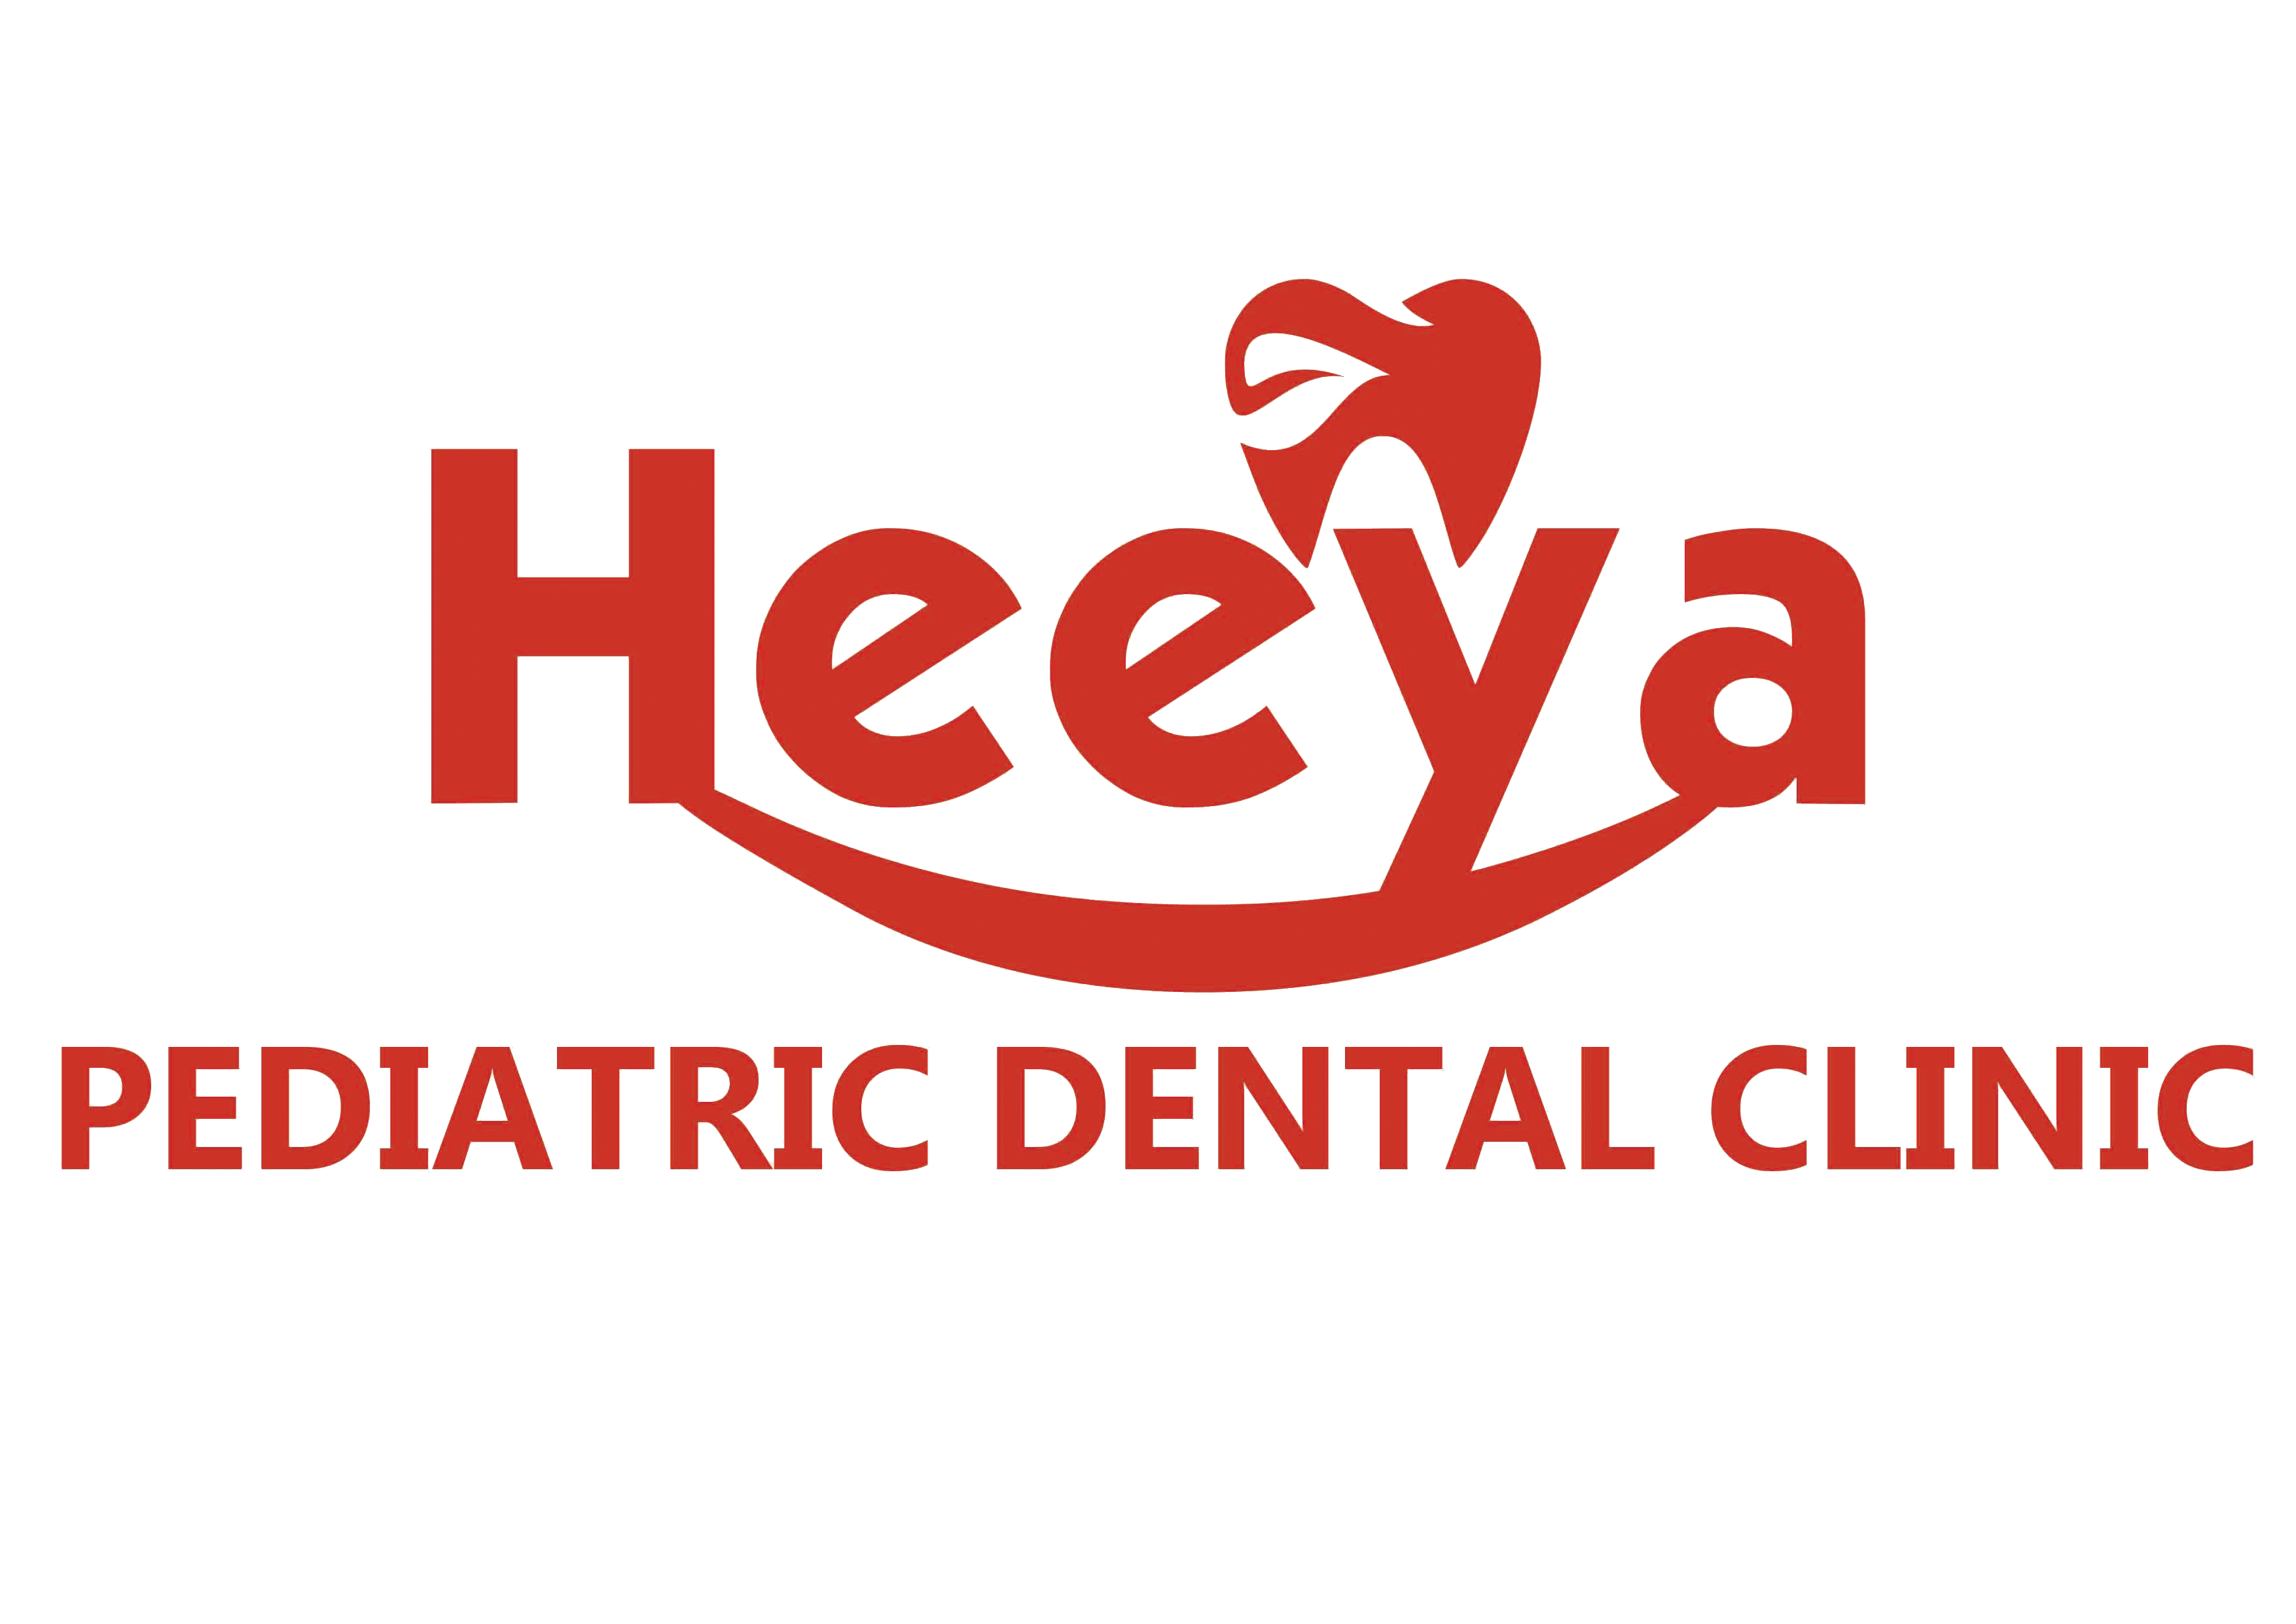 Heeya Pediatric Dental Clinic|Dentists|Medical Services